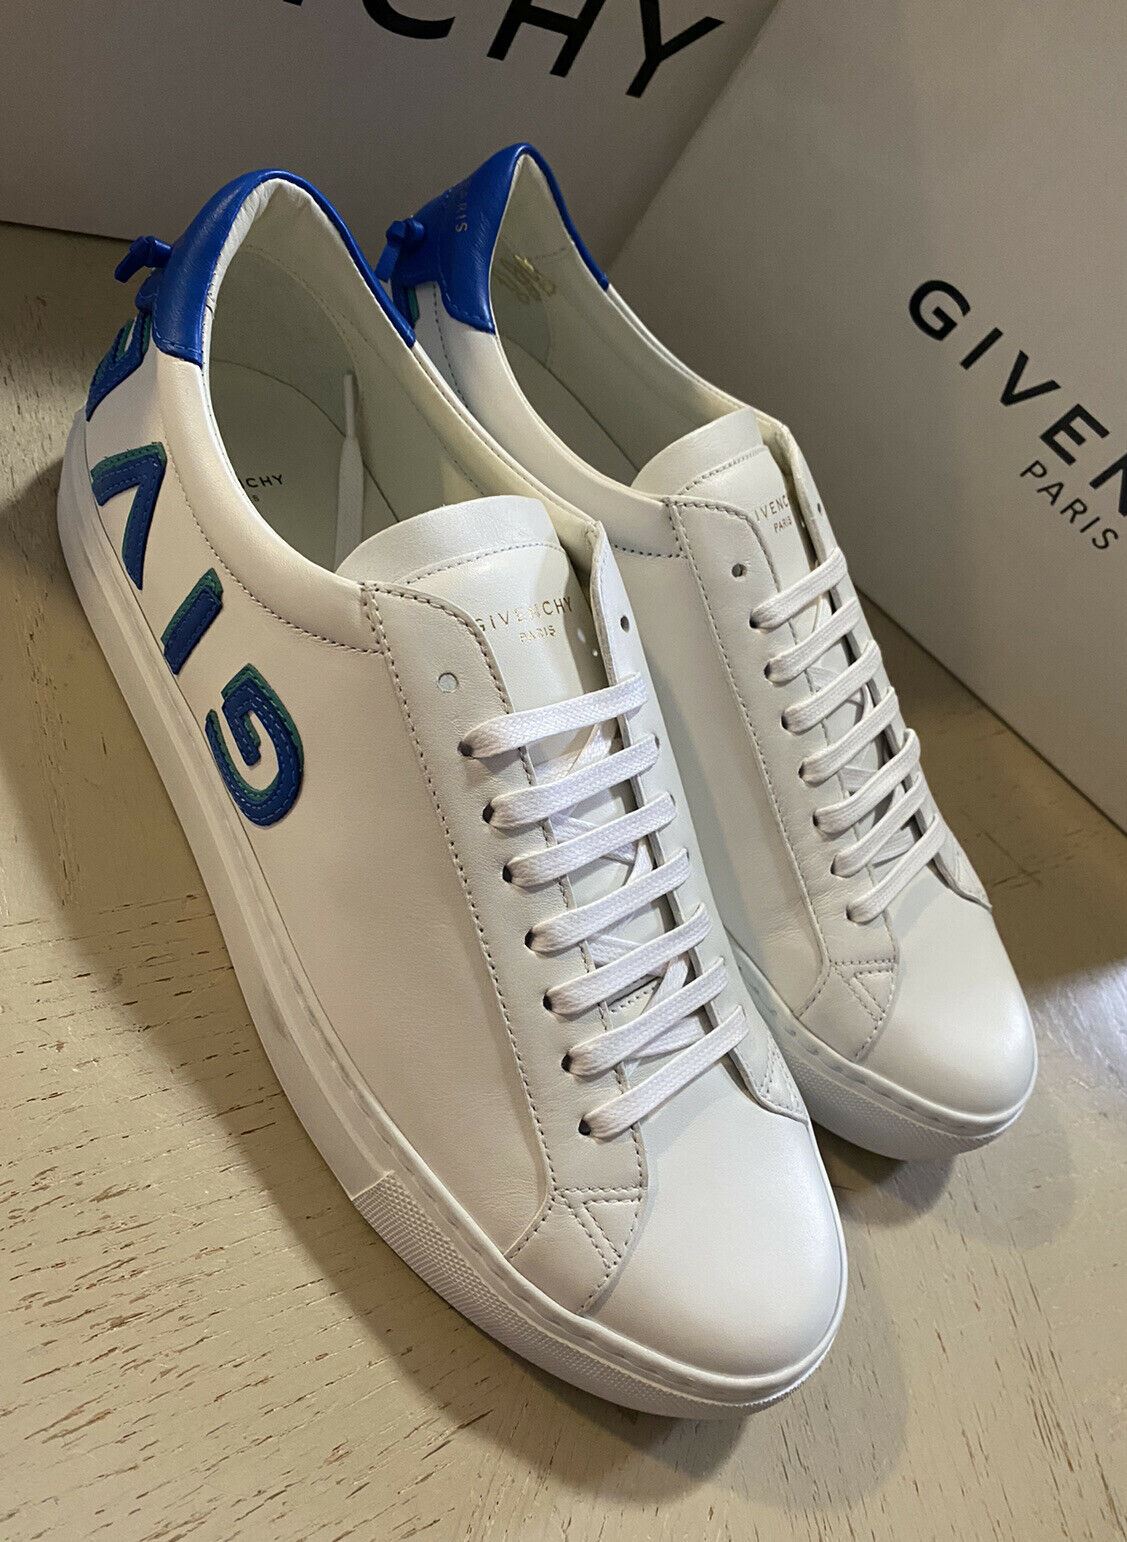 NIB Givenchy Men Leather Urban Street Sneakers Shoes White/Blue 9 US / 42 EU